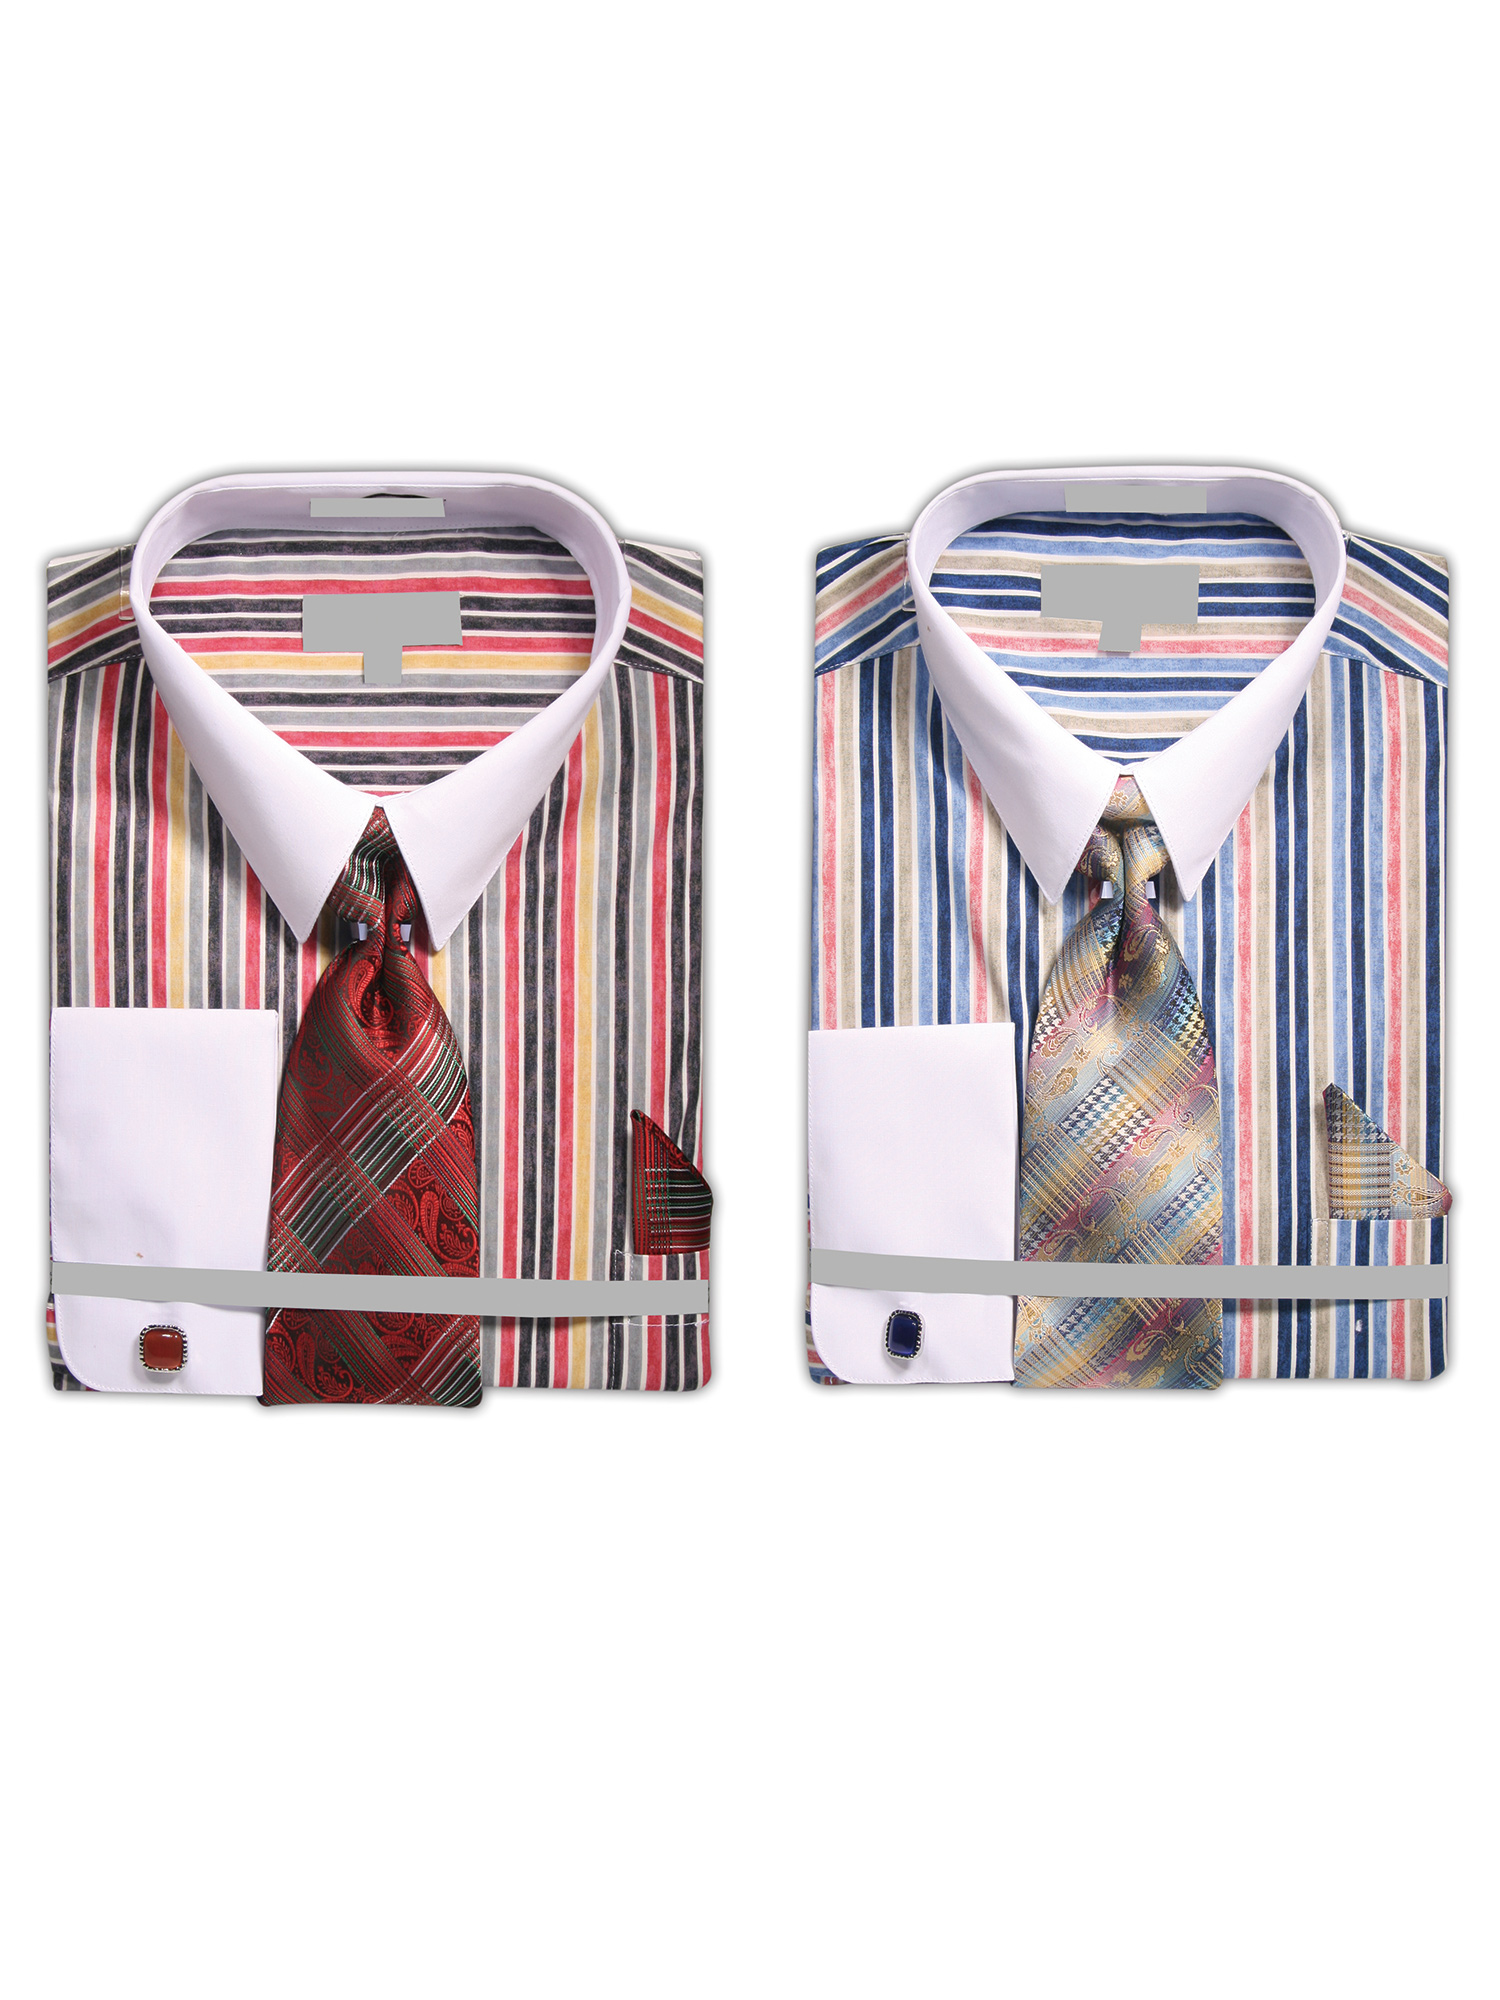 Men/'s Stylish Striped Dress Shirt w// Tie and Handkerchief French Cuff Style SG17